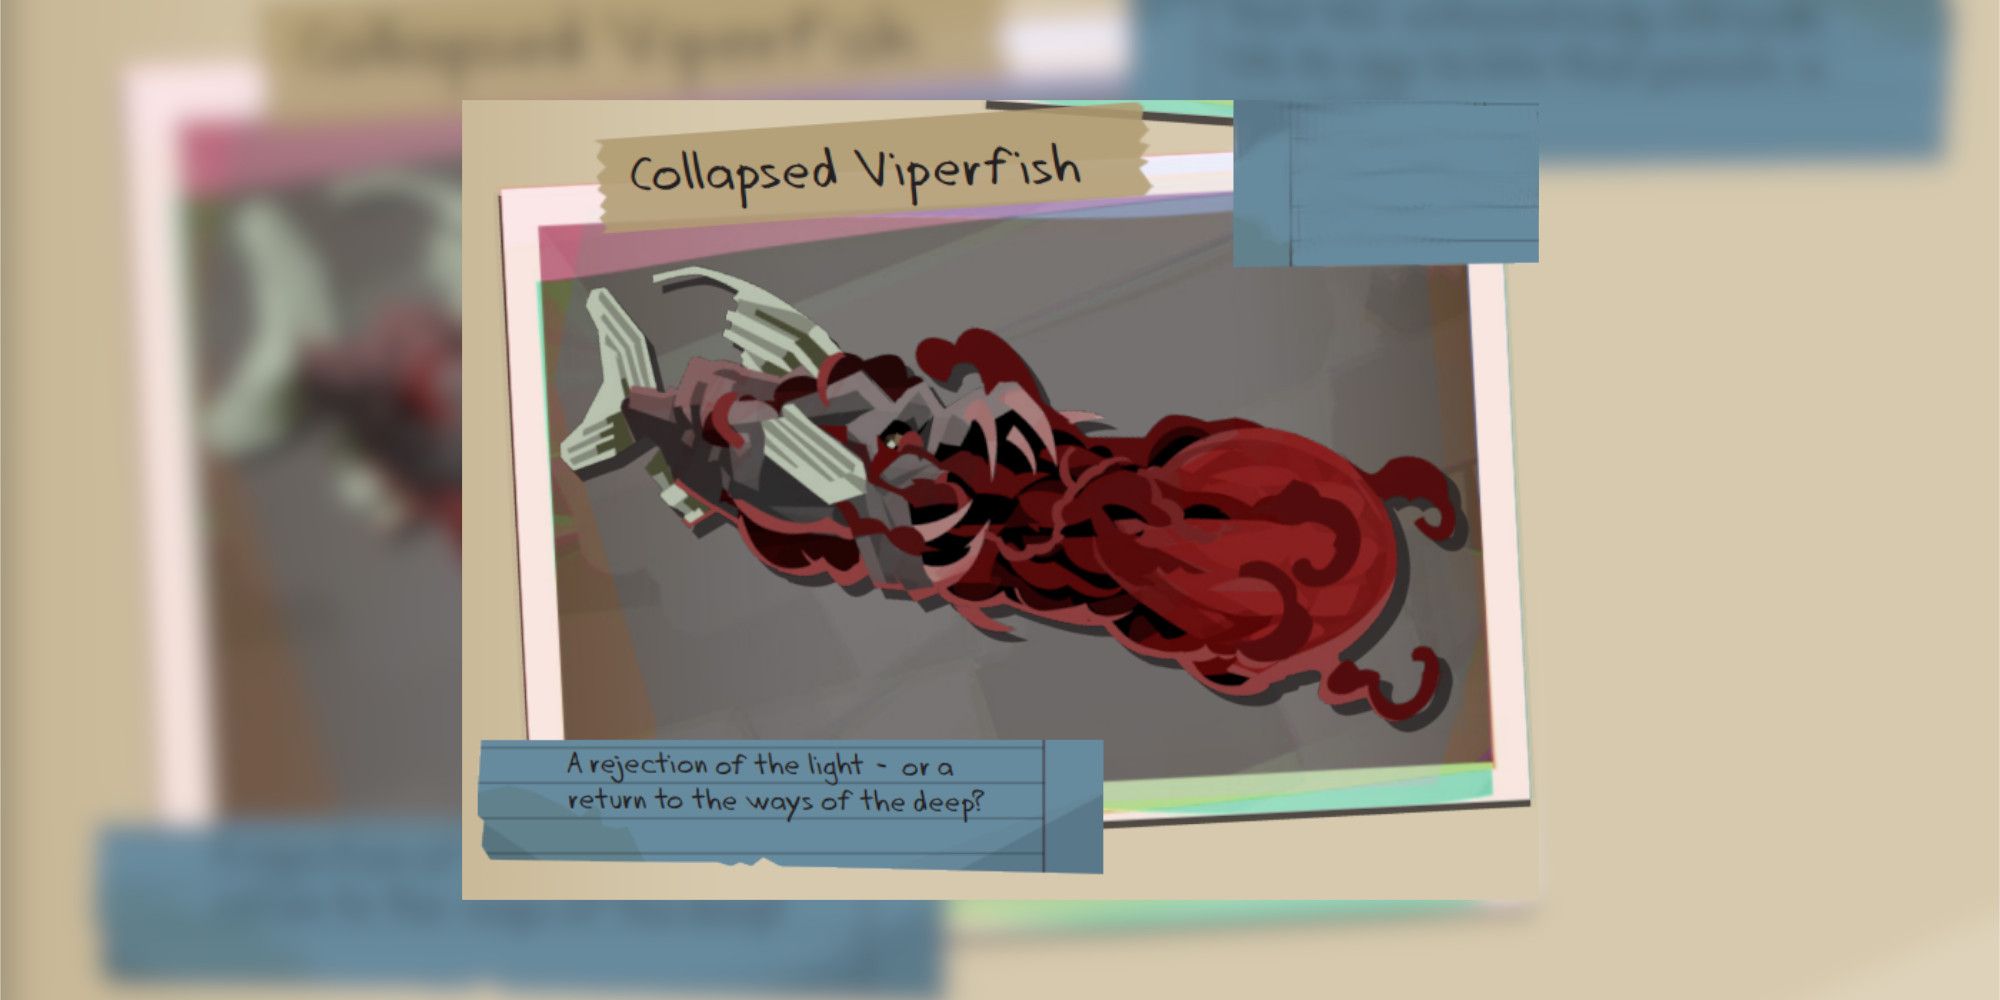 Dredge Collapse Viperfish